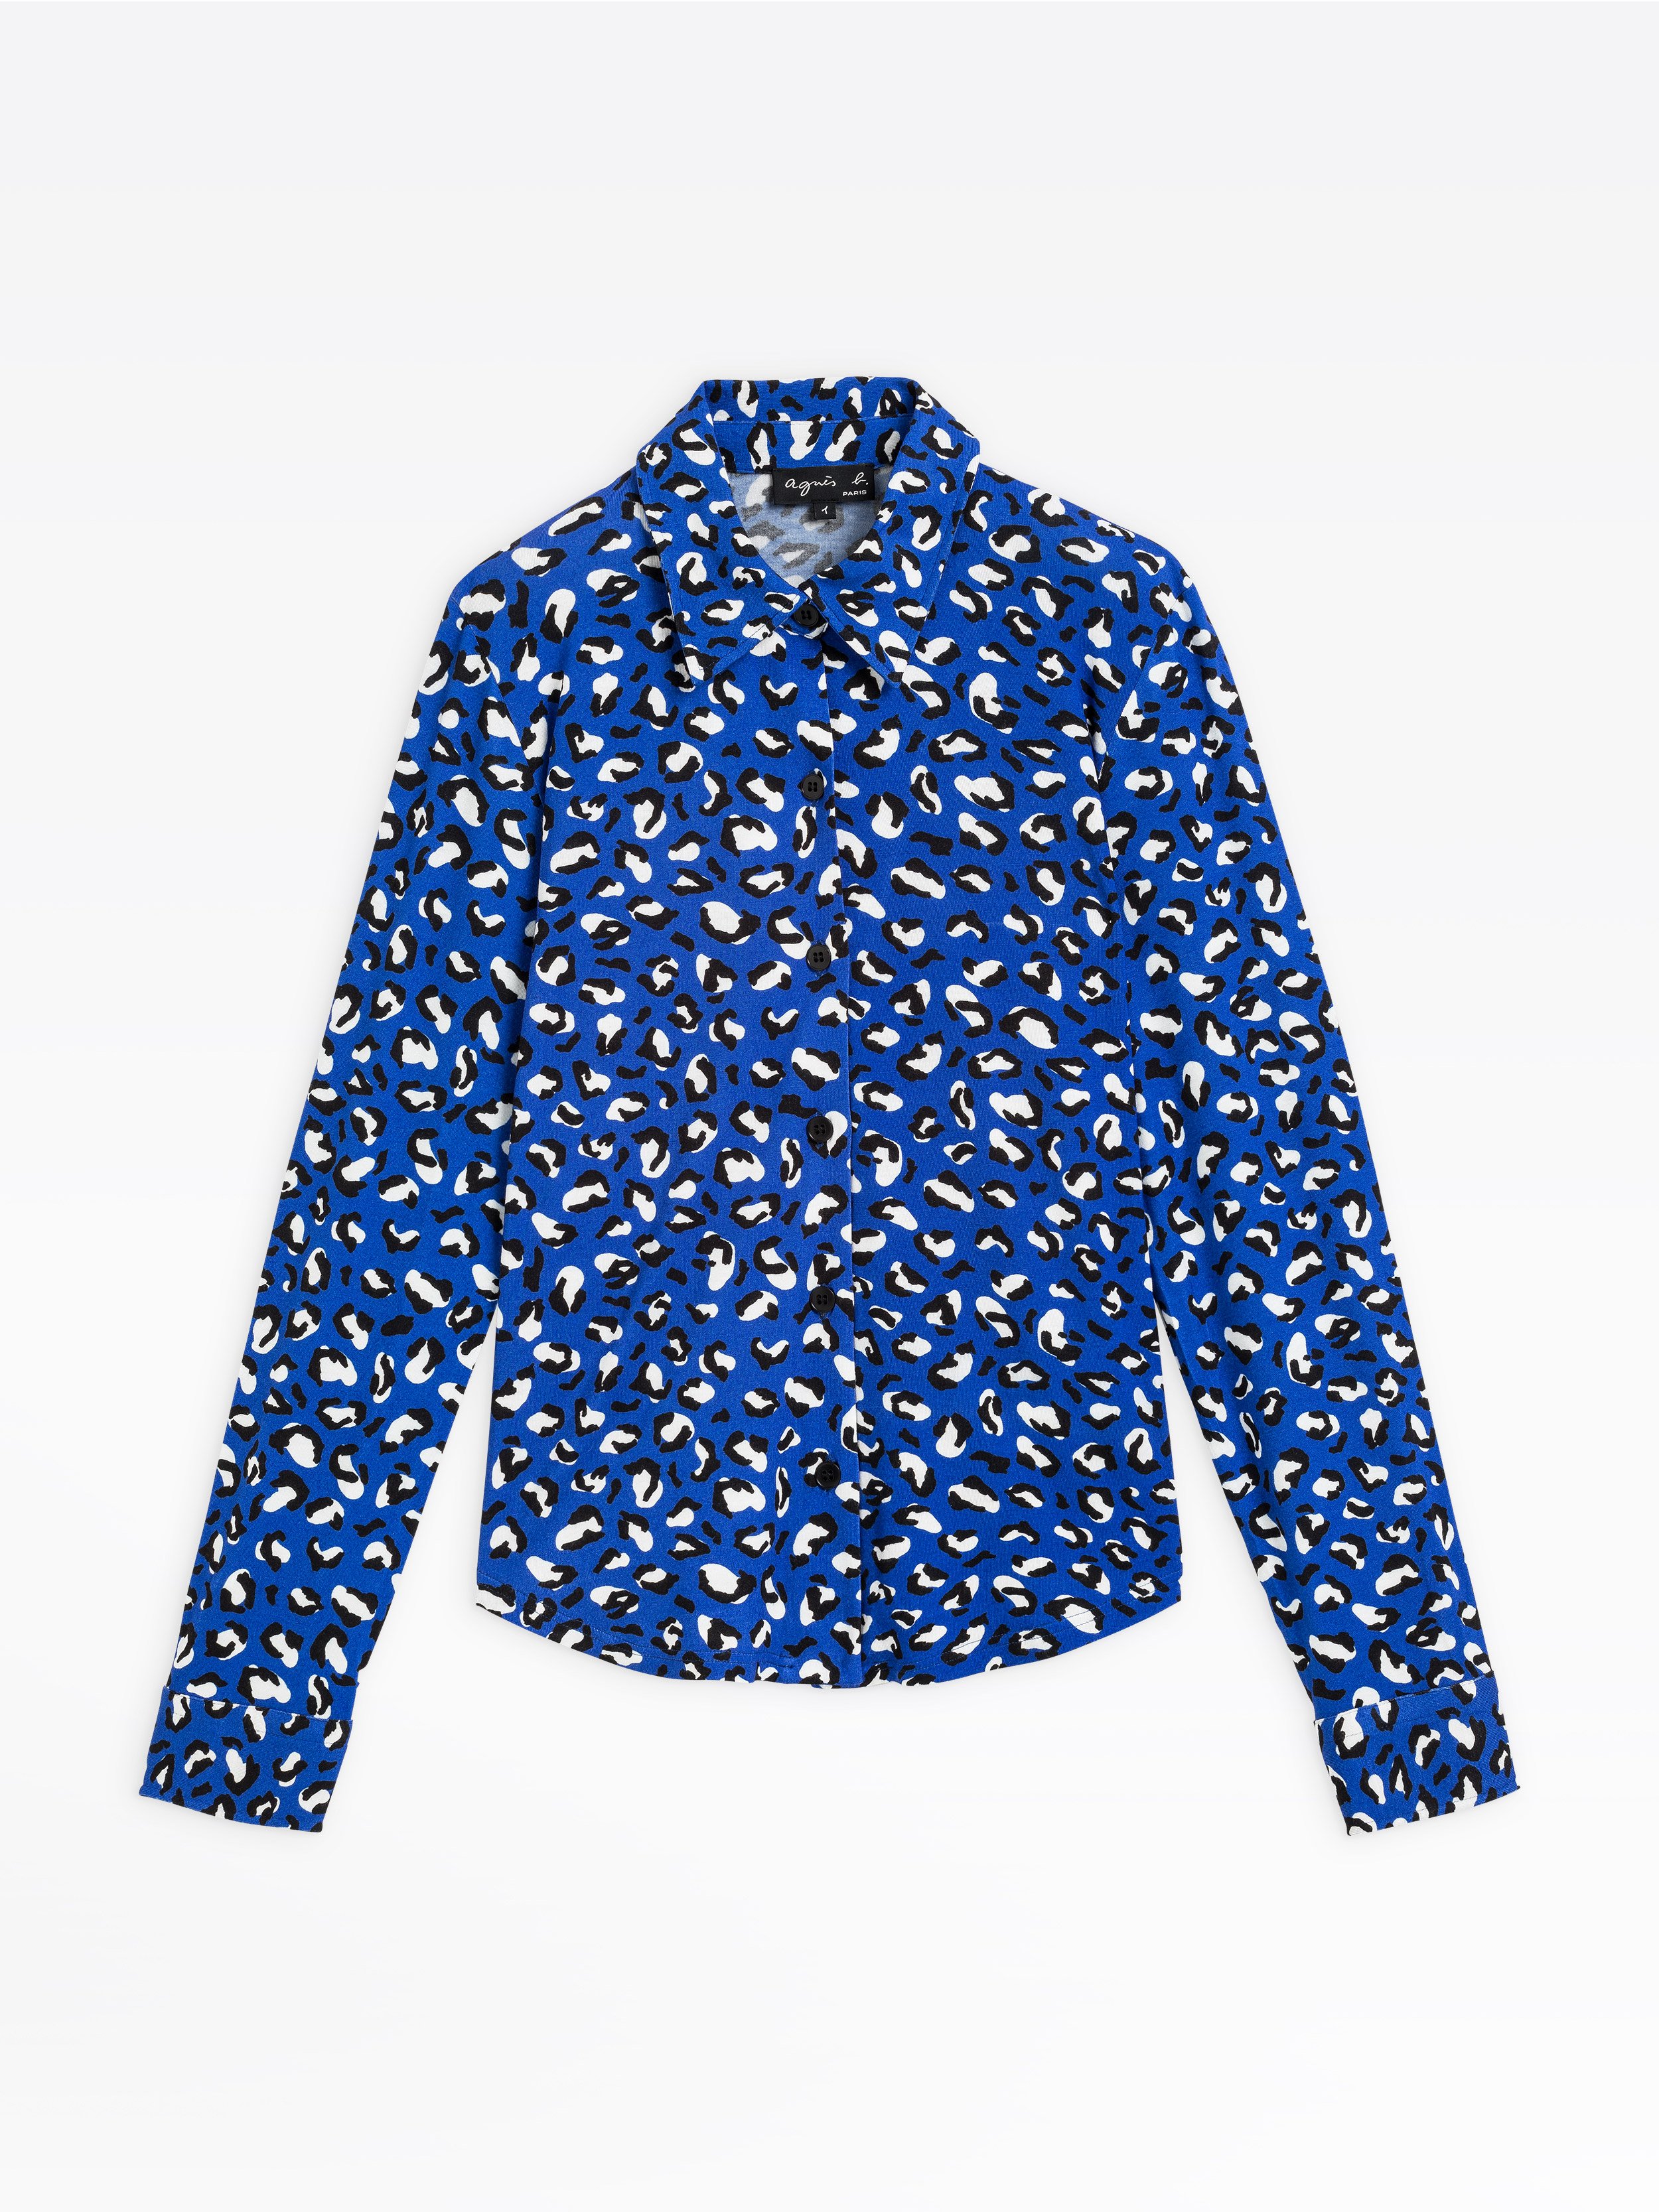 blue leopard clothing